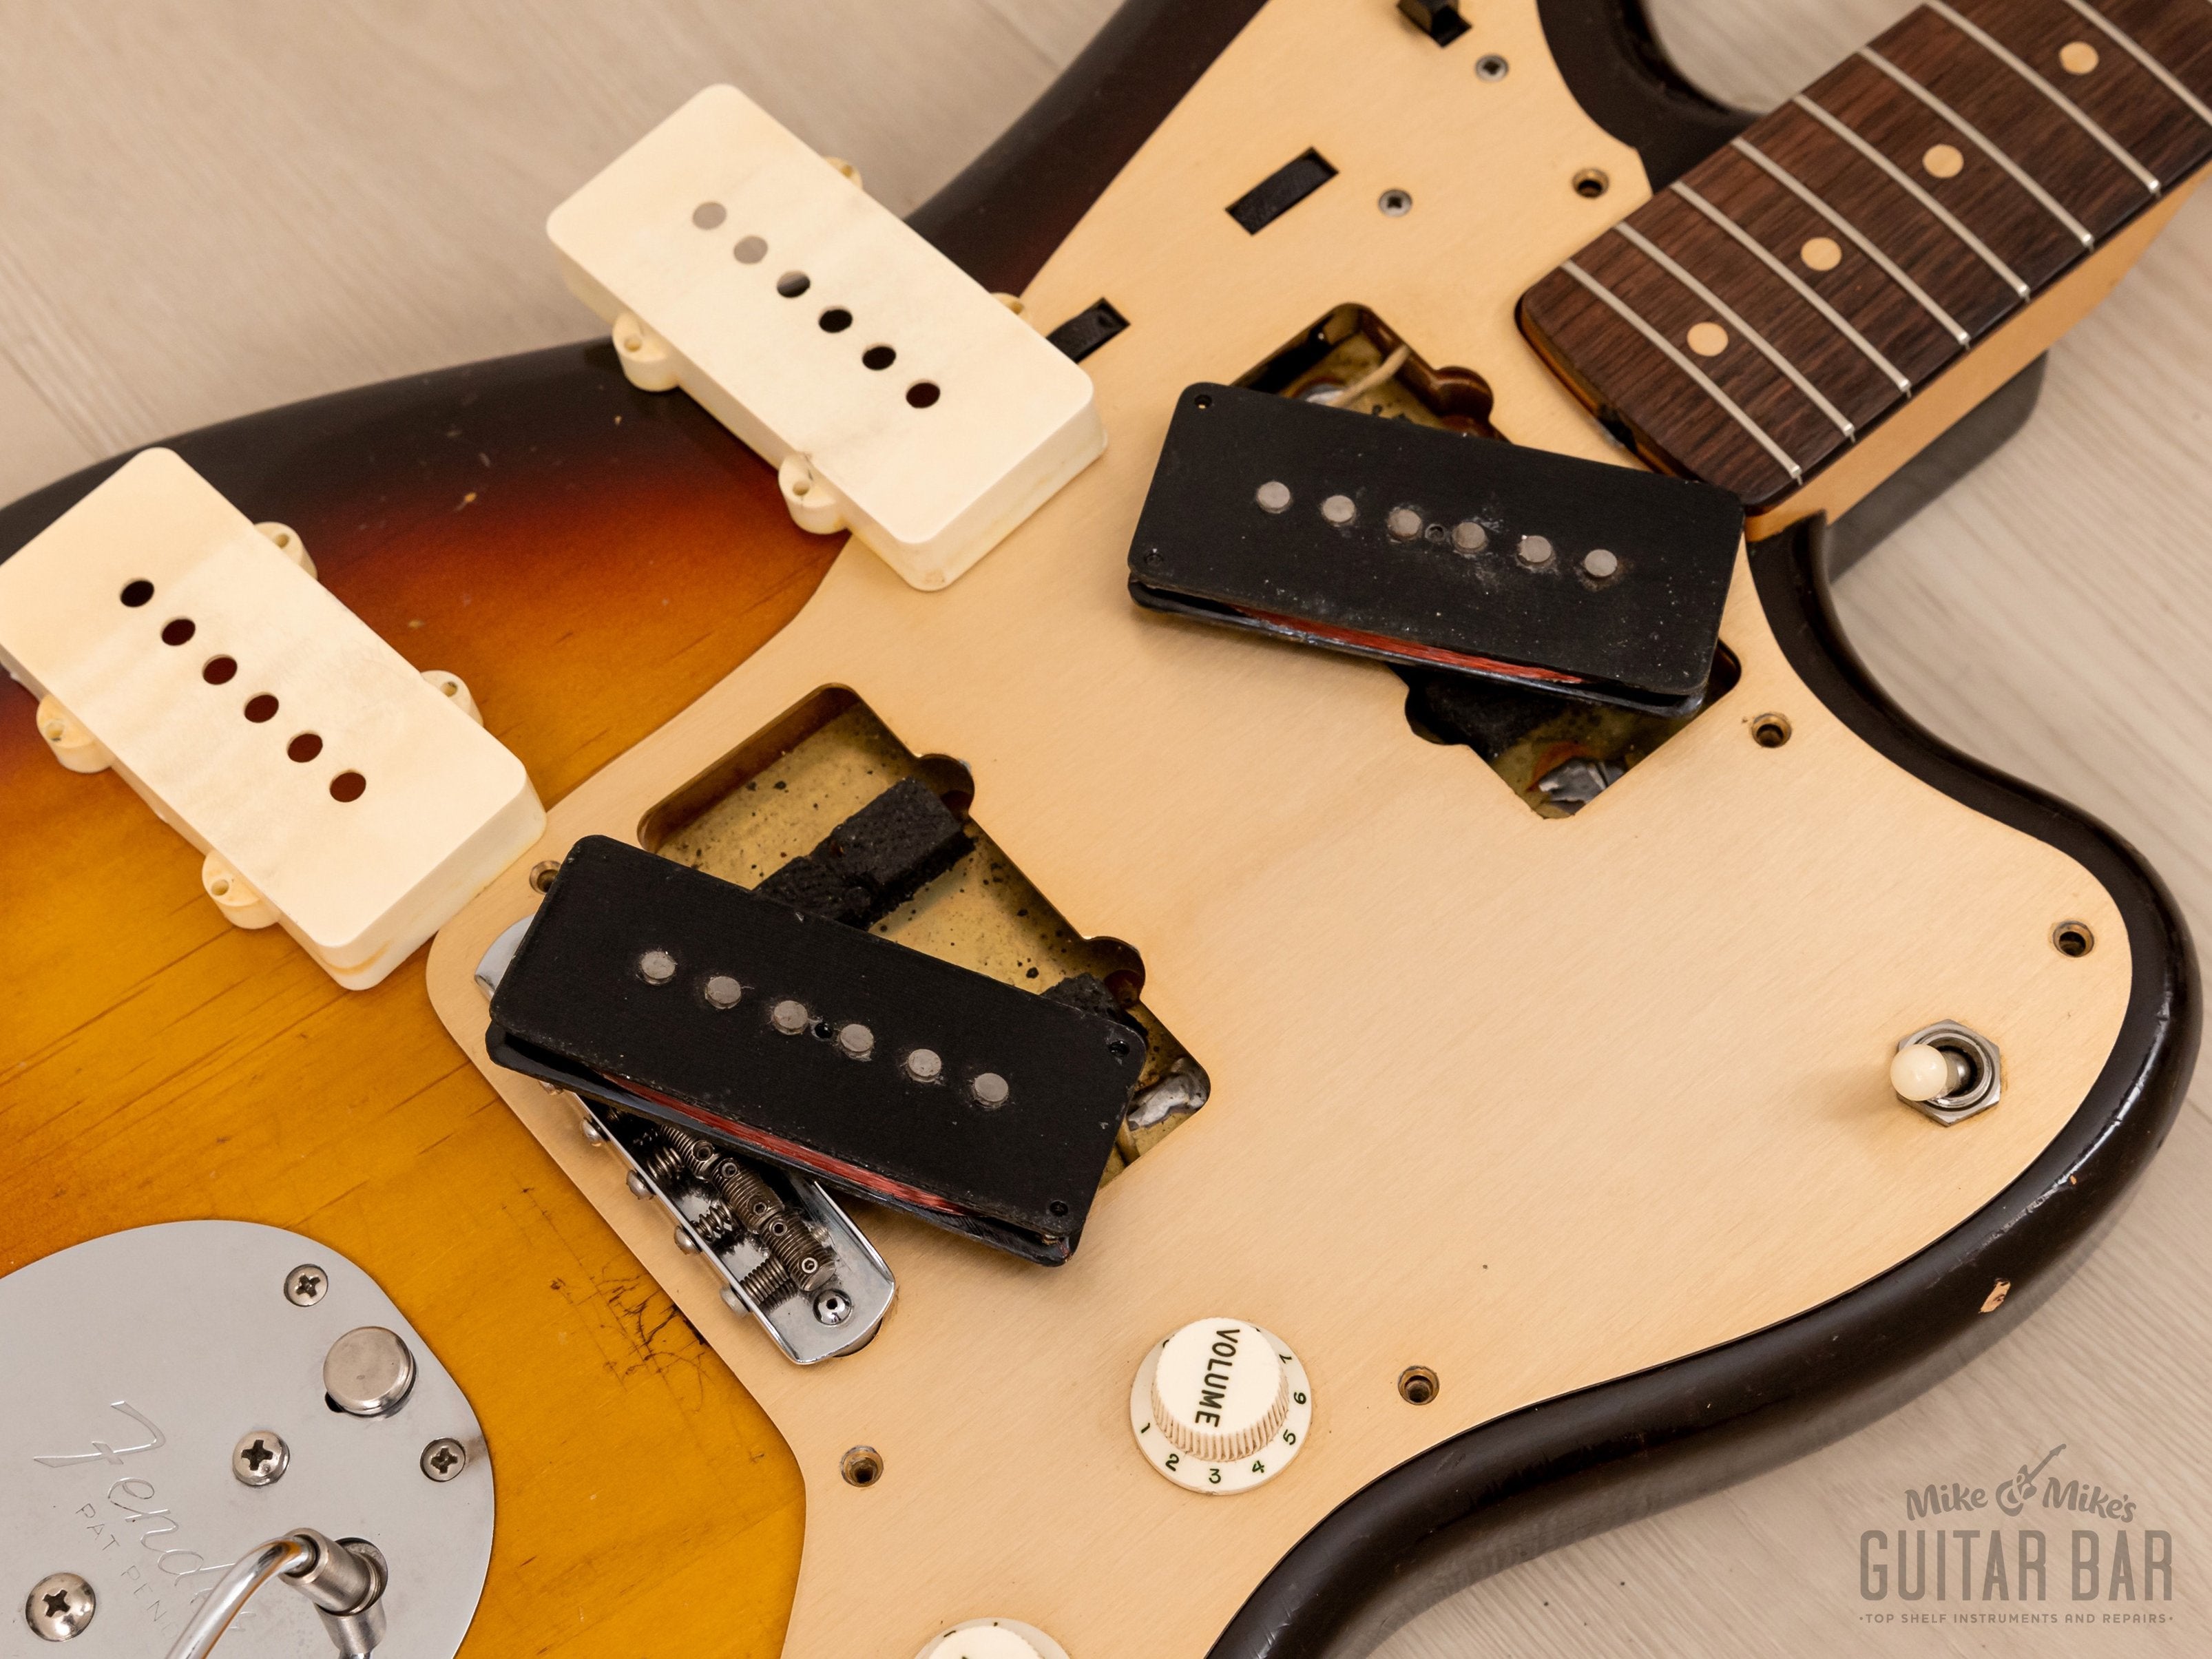 1959 Fender Jazzmaster Vintage Offset Guitar Sunburst w/ Tweed Case, Ed King-Owned (Lynyrd Skynyrd)